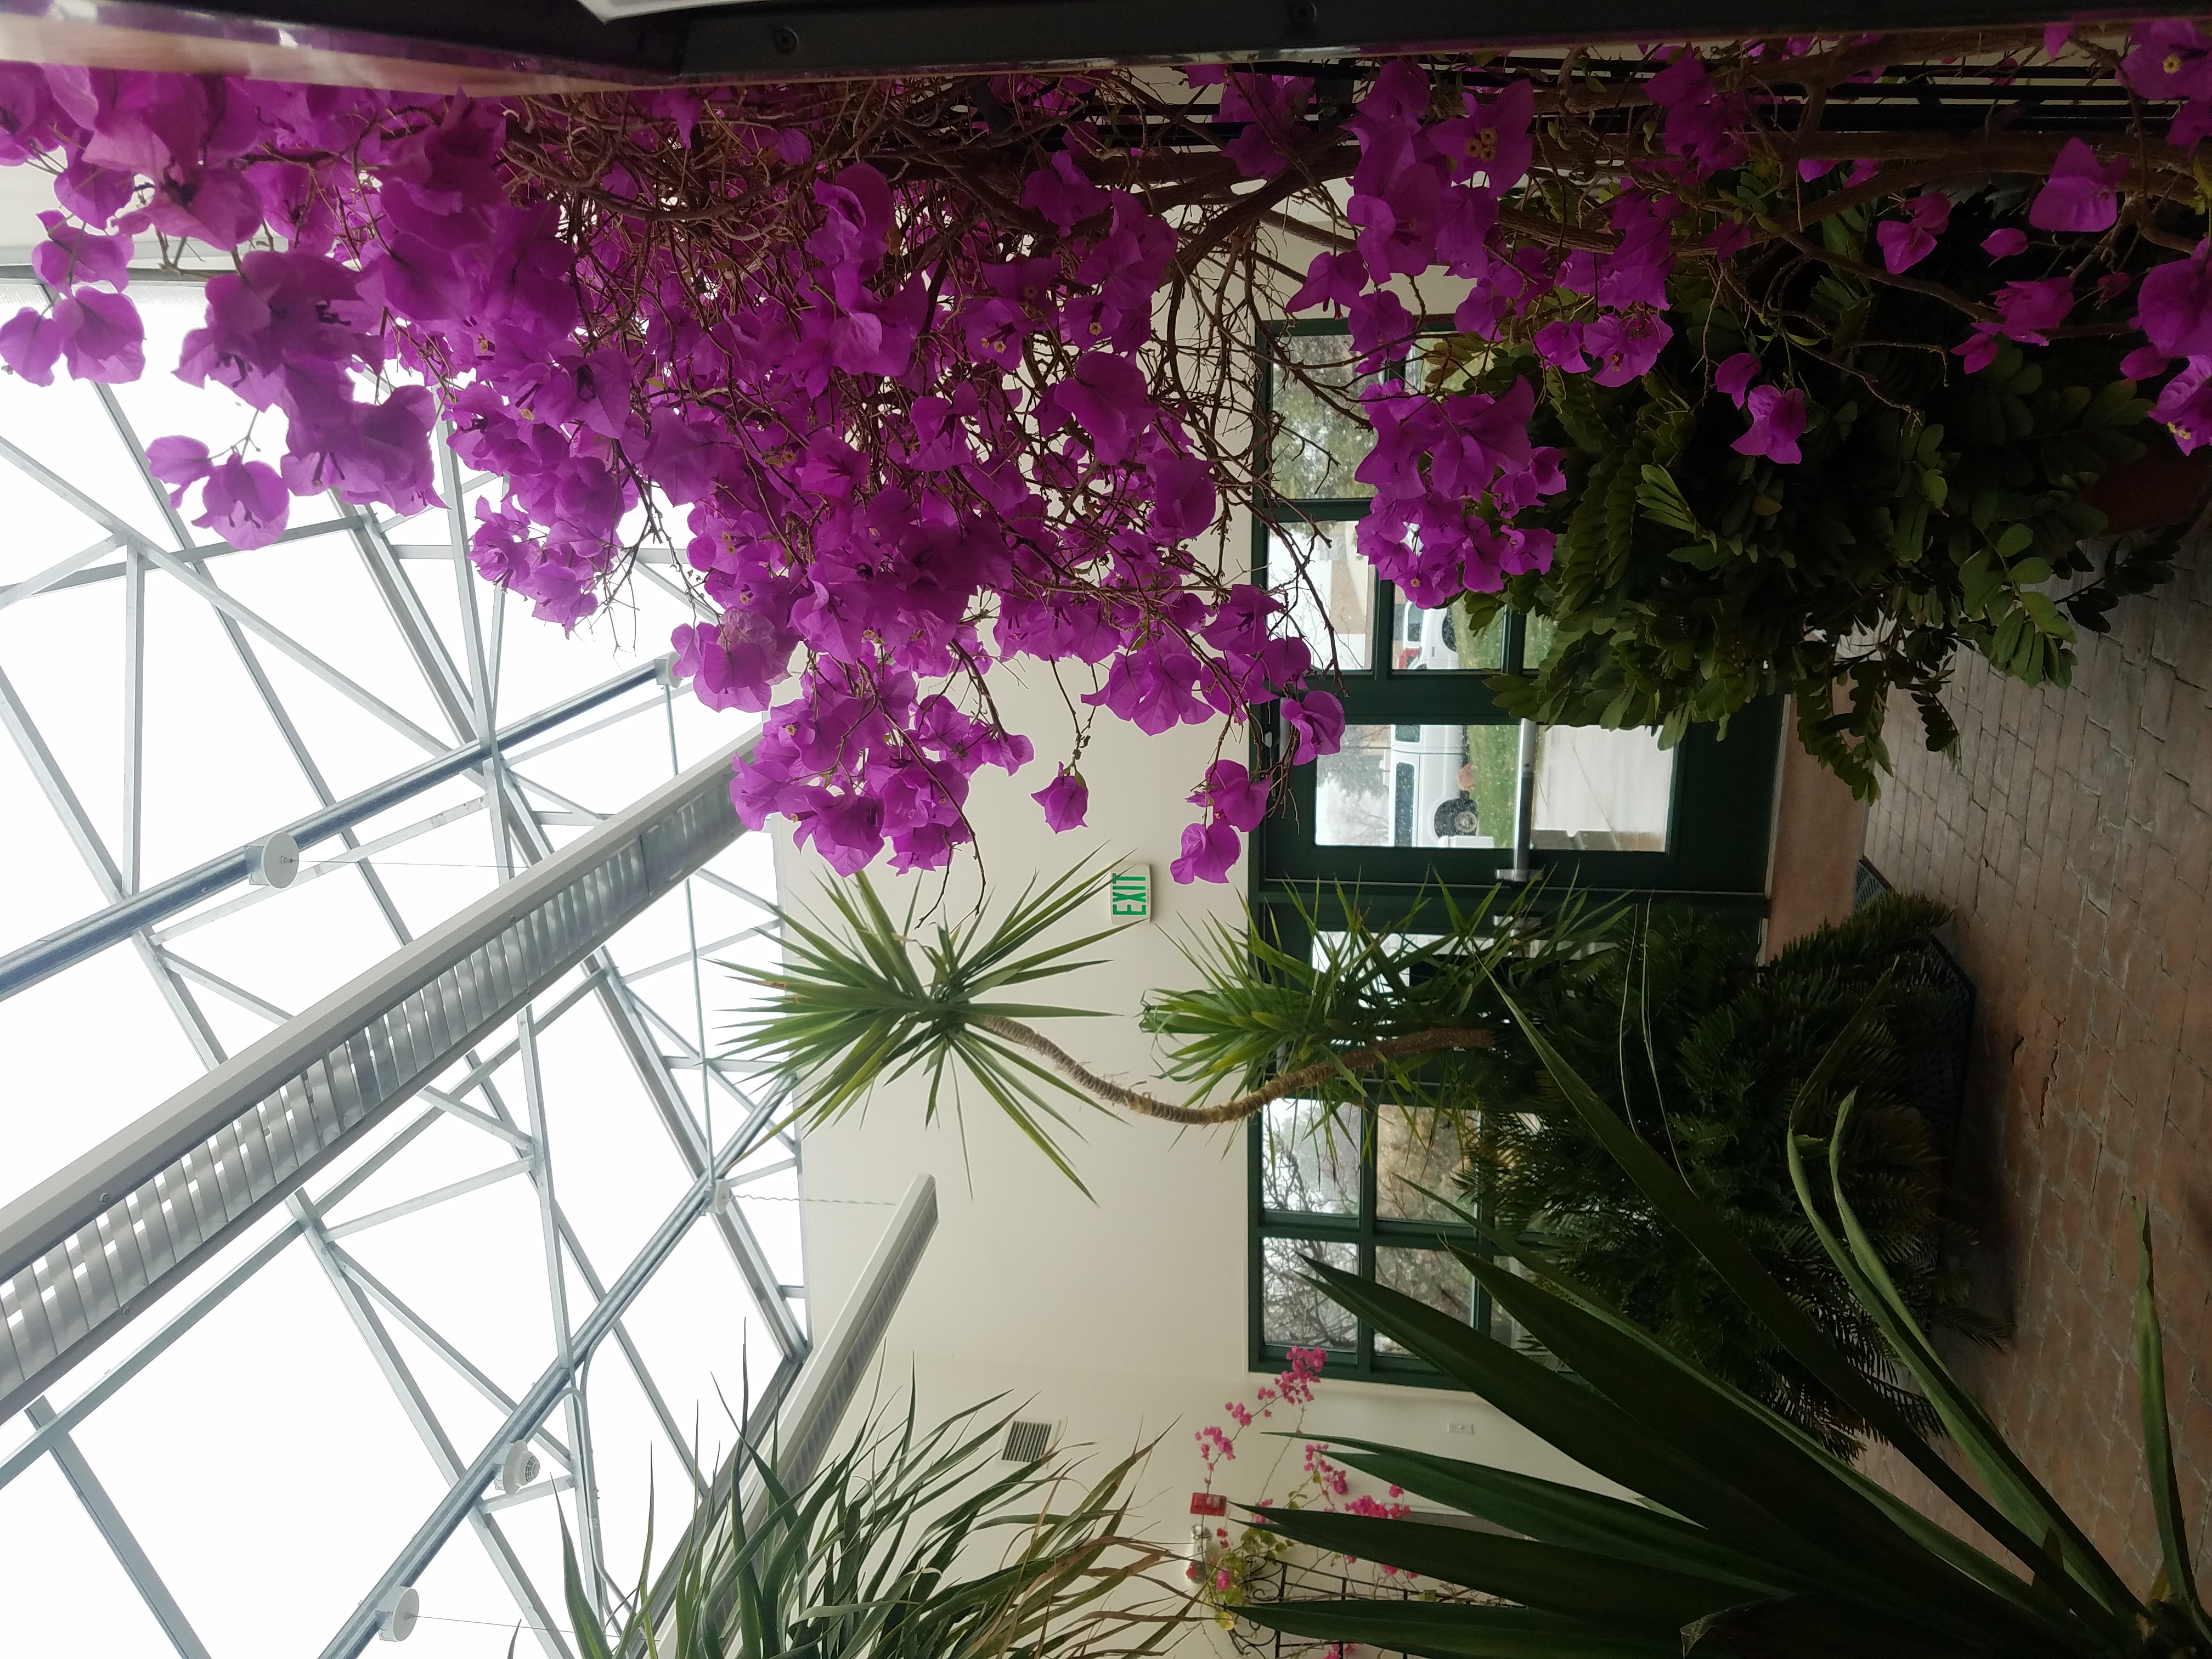 The Plant Sciences lobby